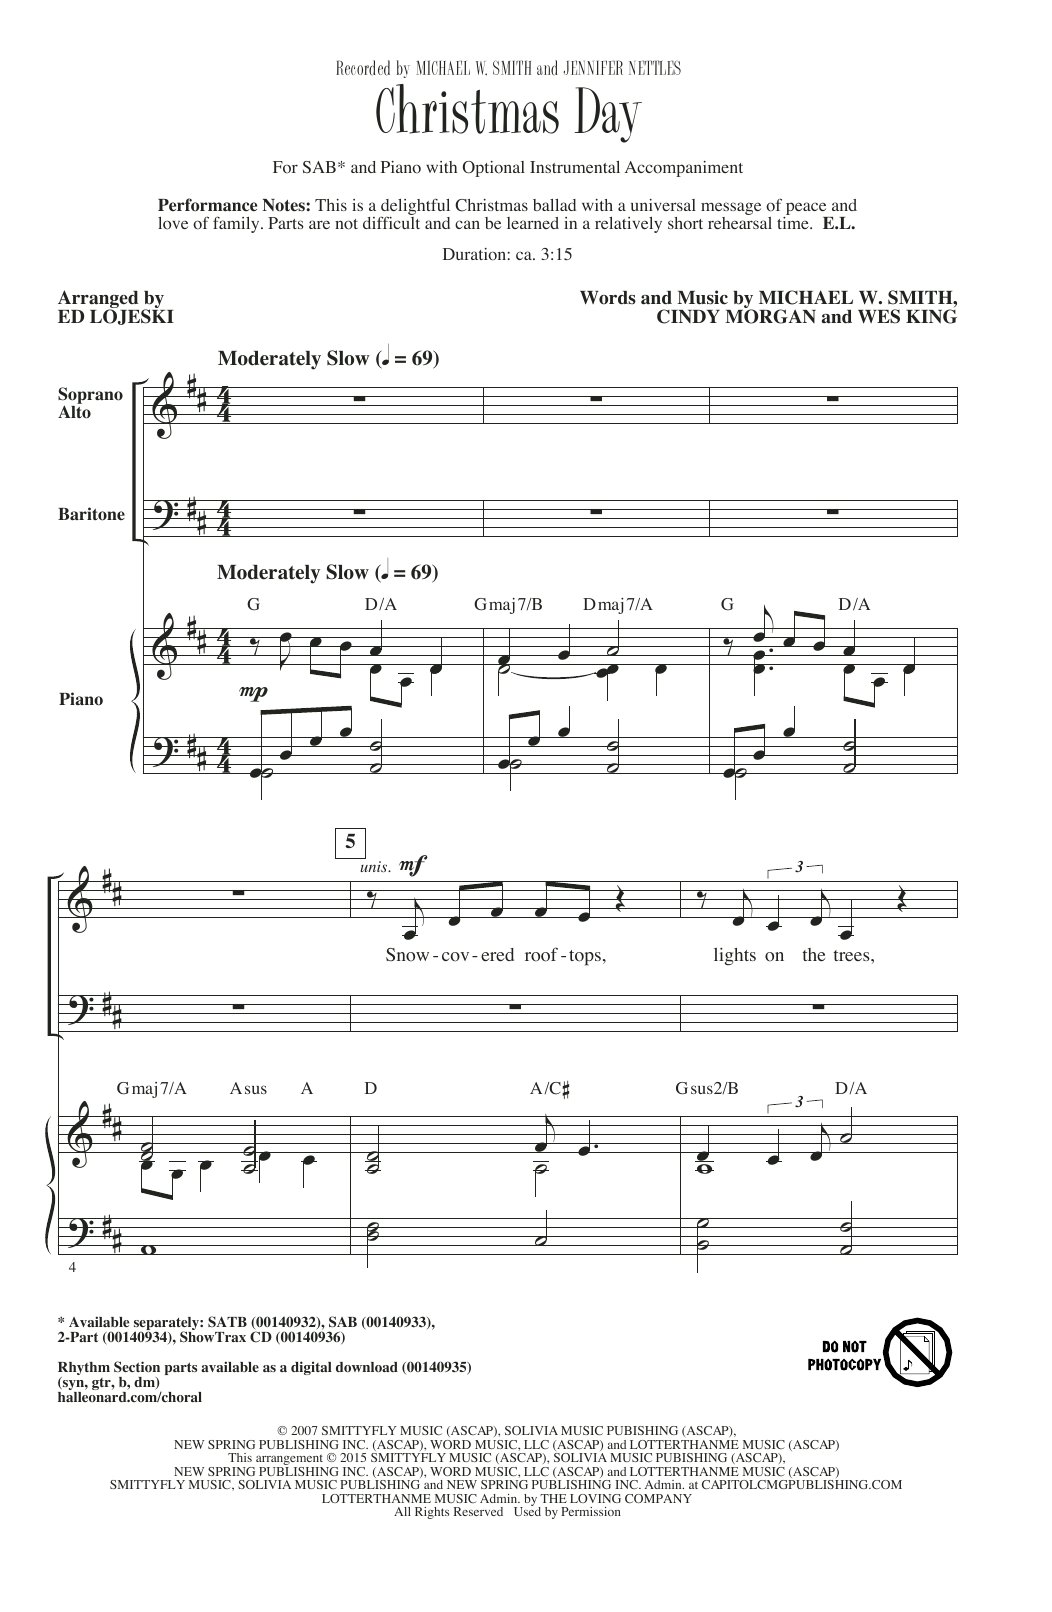 Download Michael W. Smith Christmas Day (arr. Ed Lojeski) Sheet Music